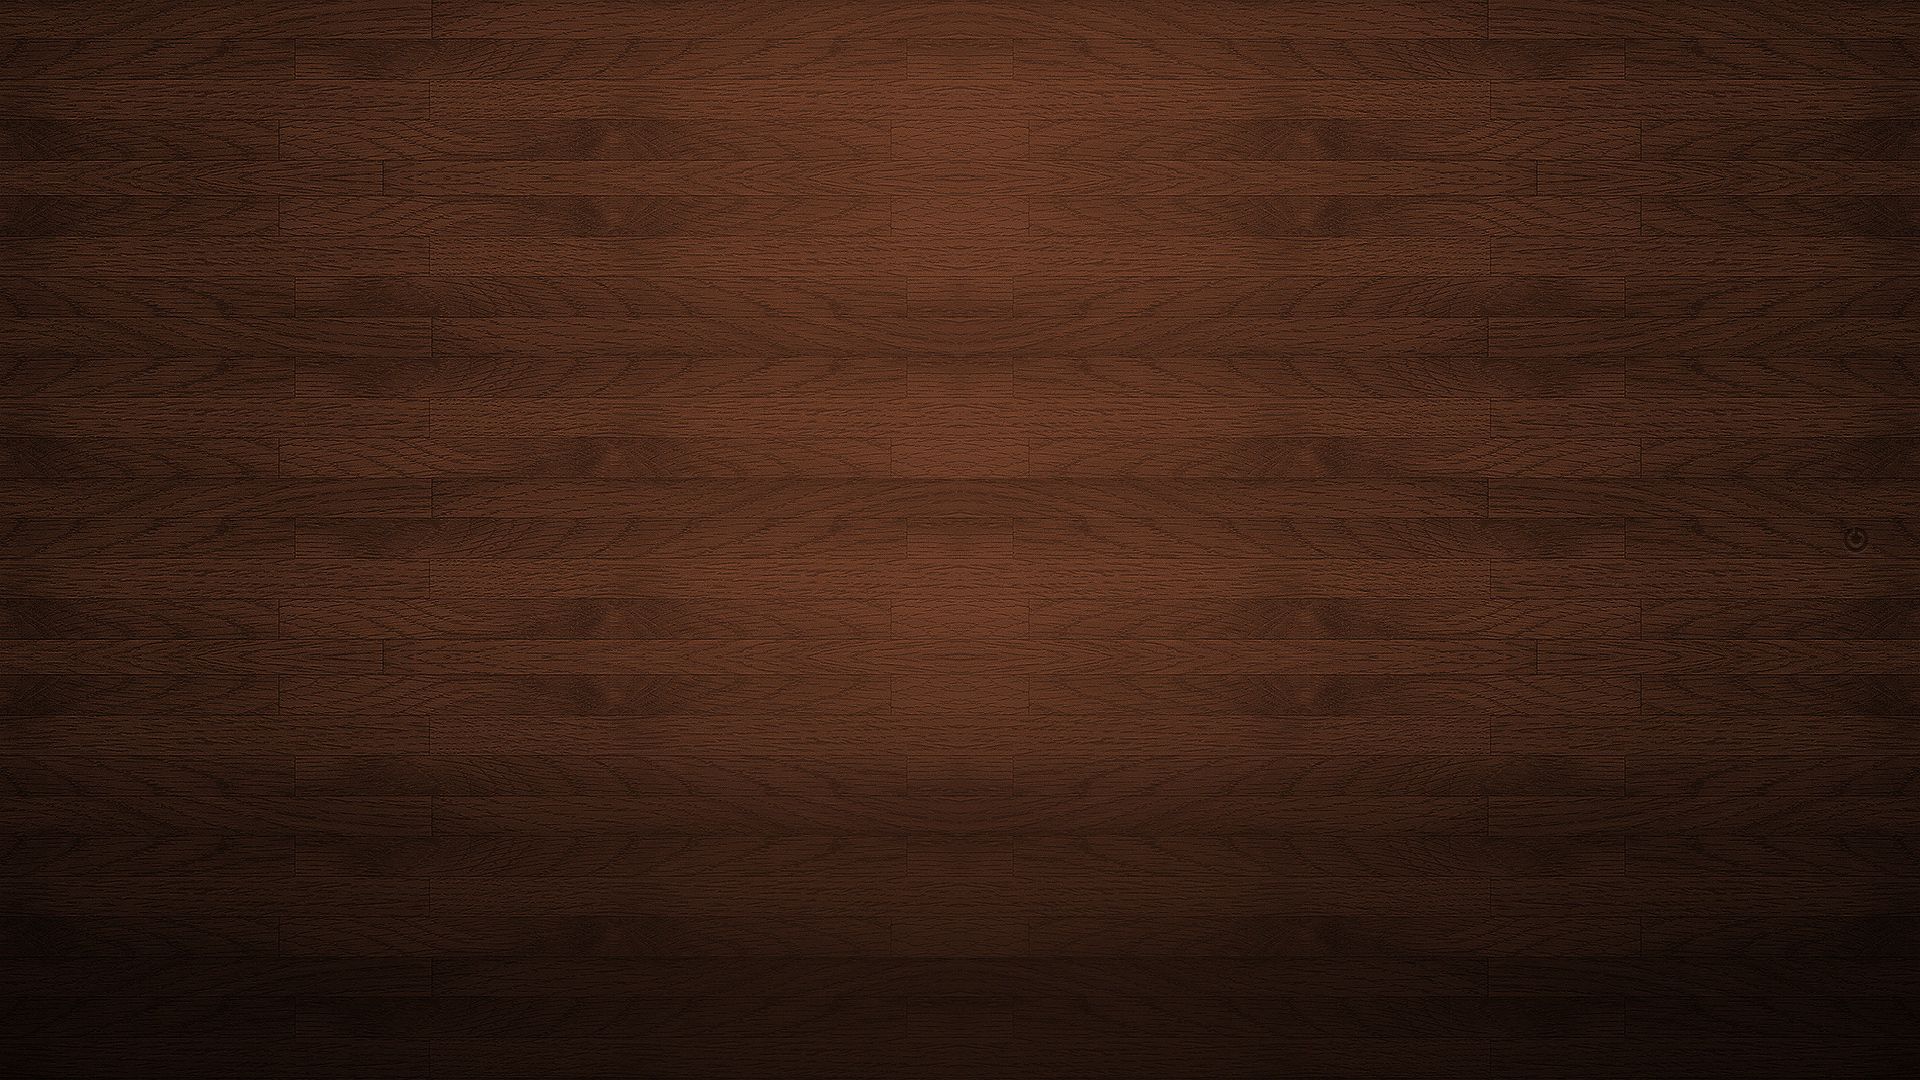 wood, shadow, board, wooden, texture, dark, textures, surface